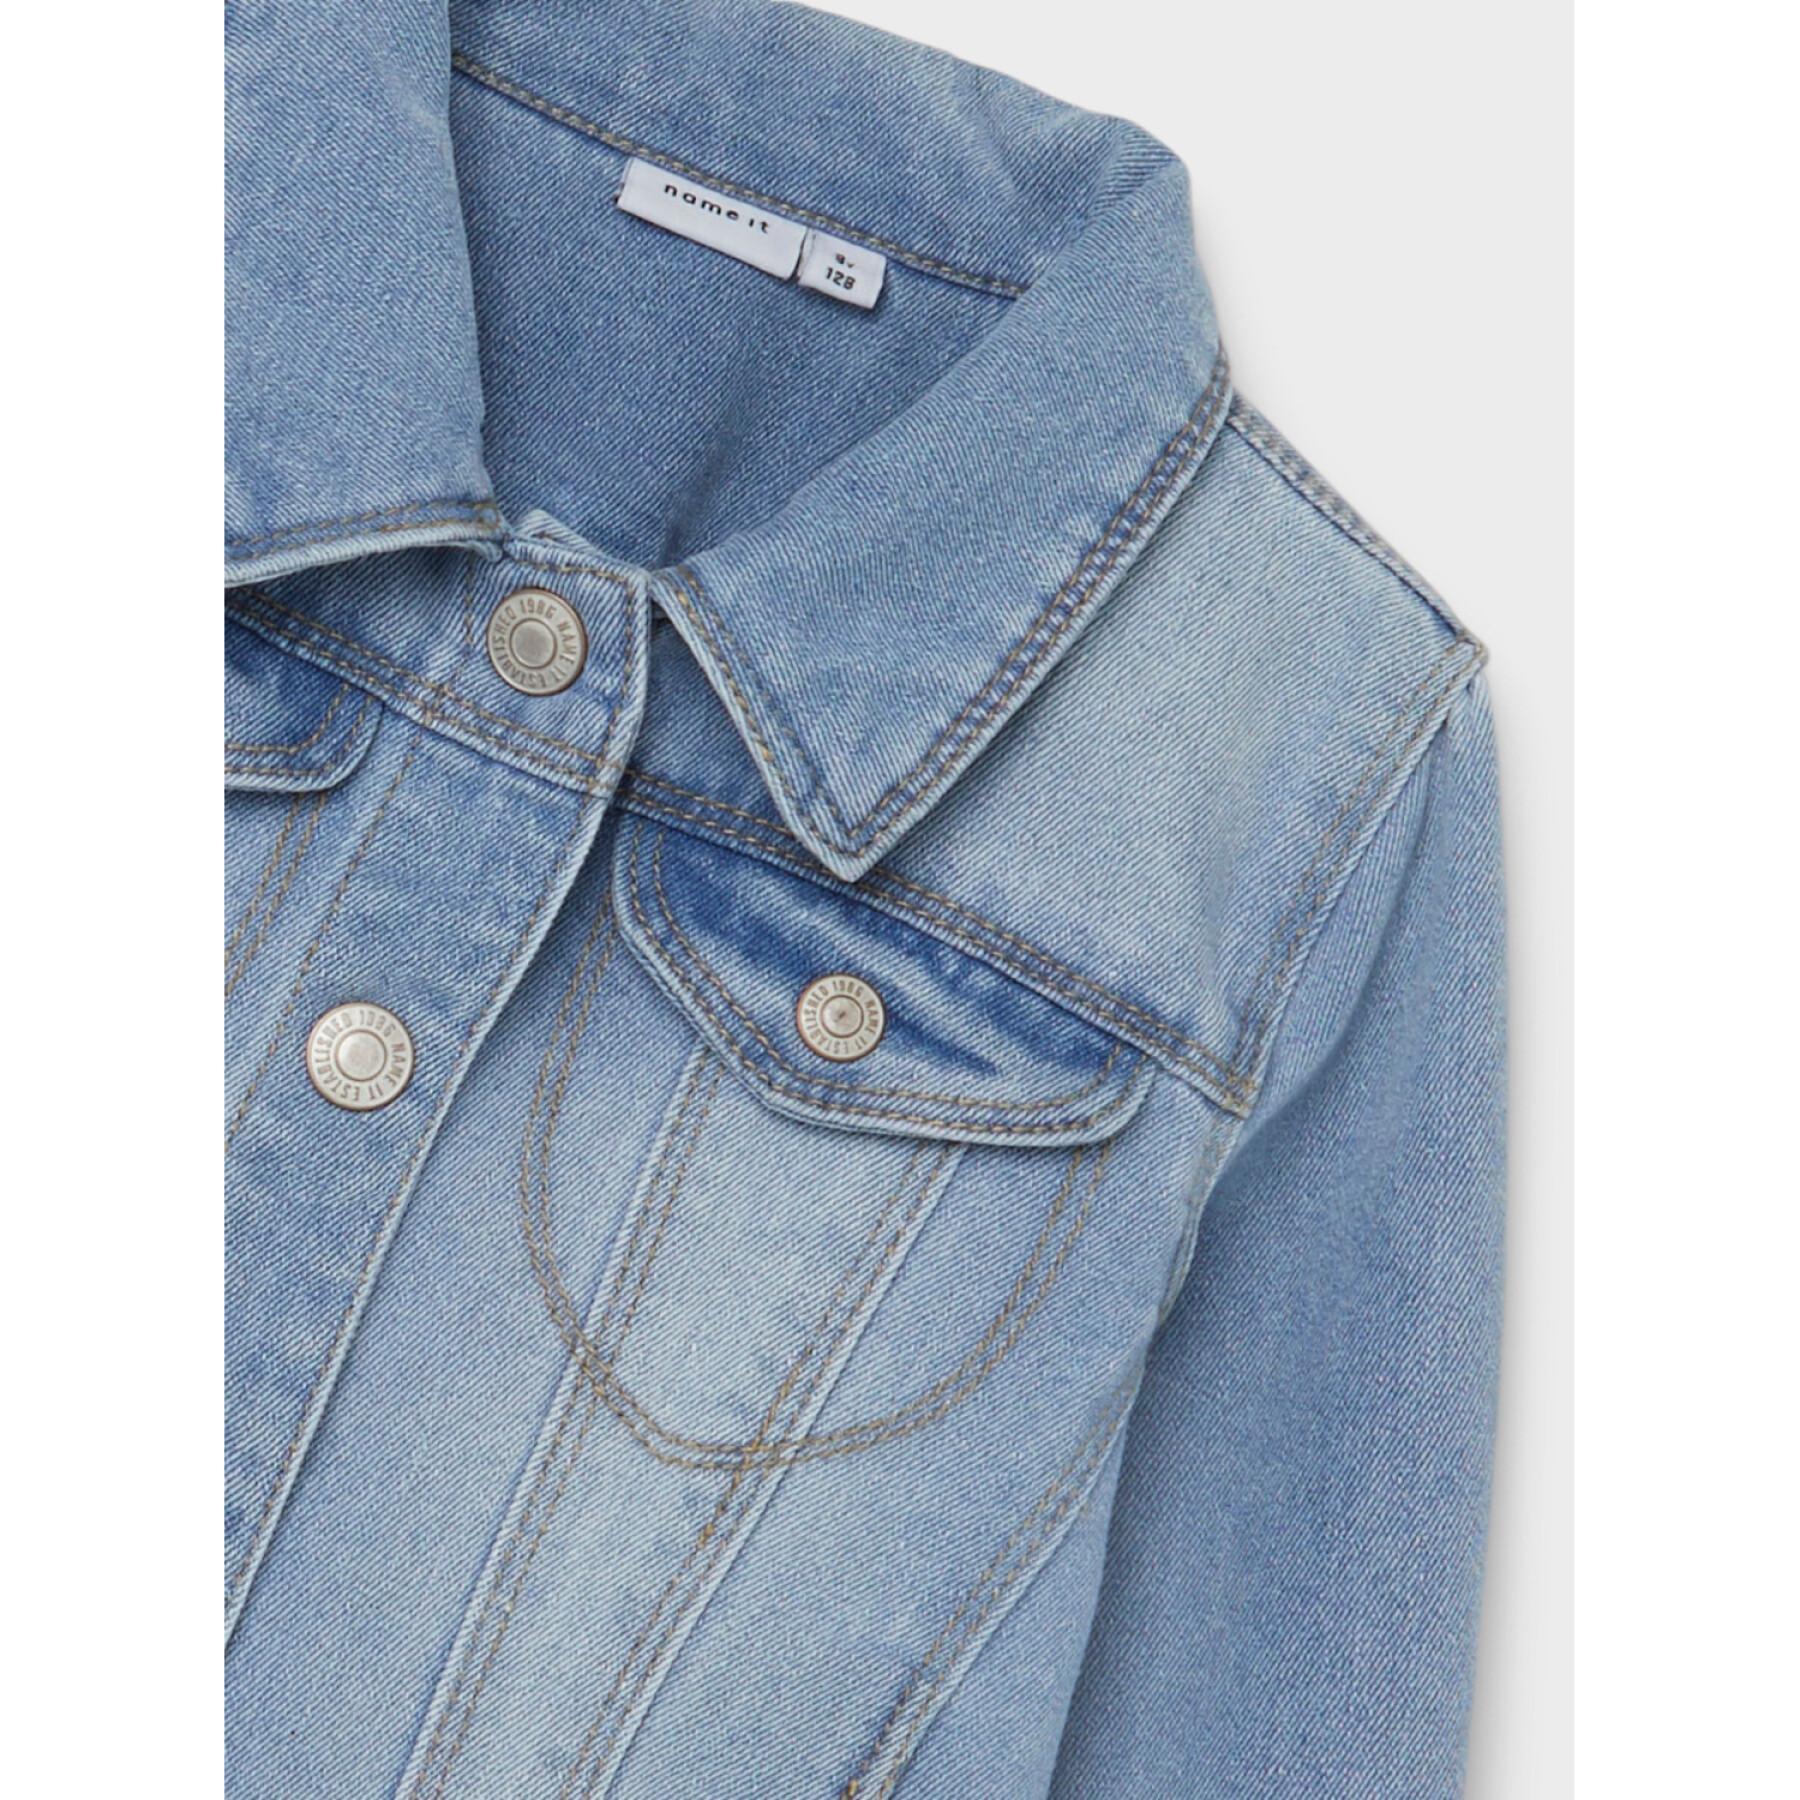 Jacket in jeans fille Name it 2210-SR